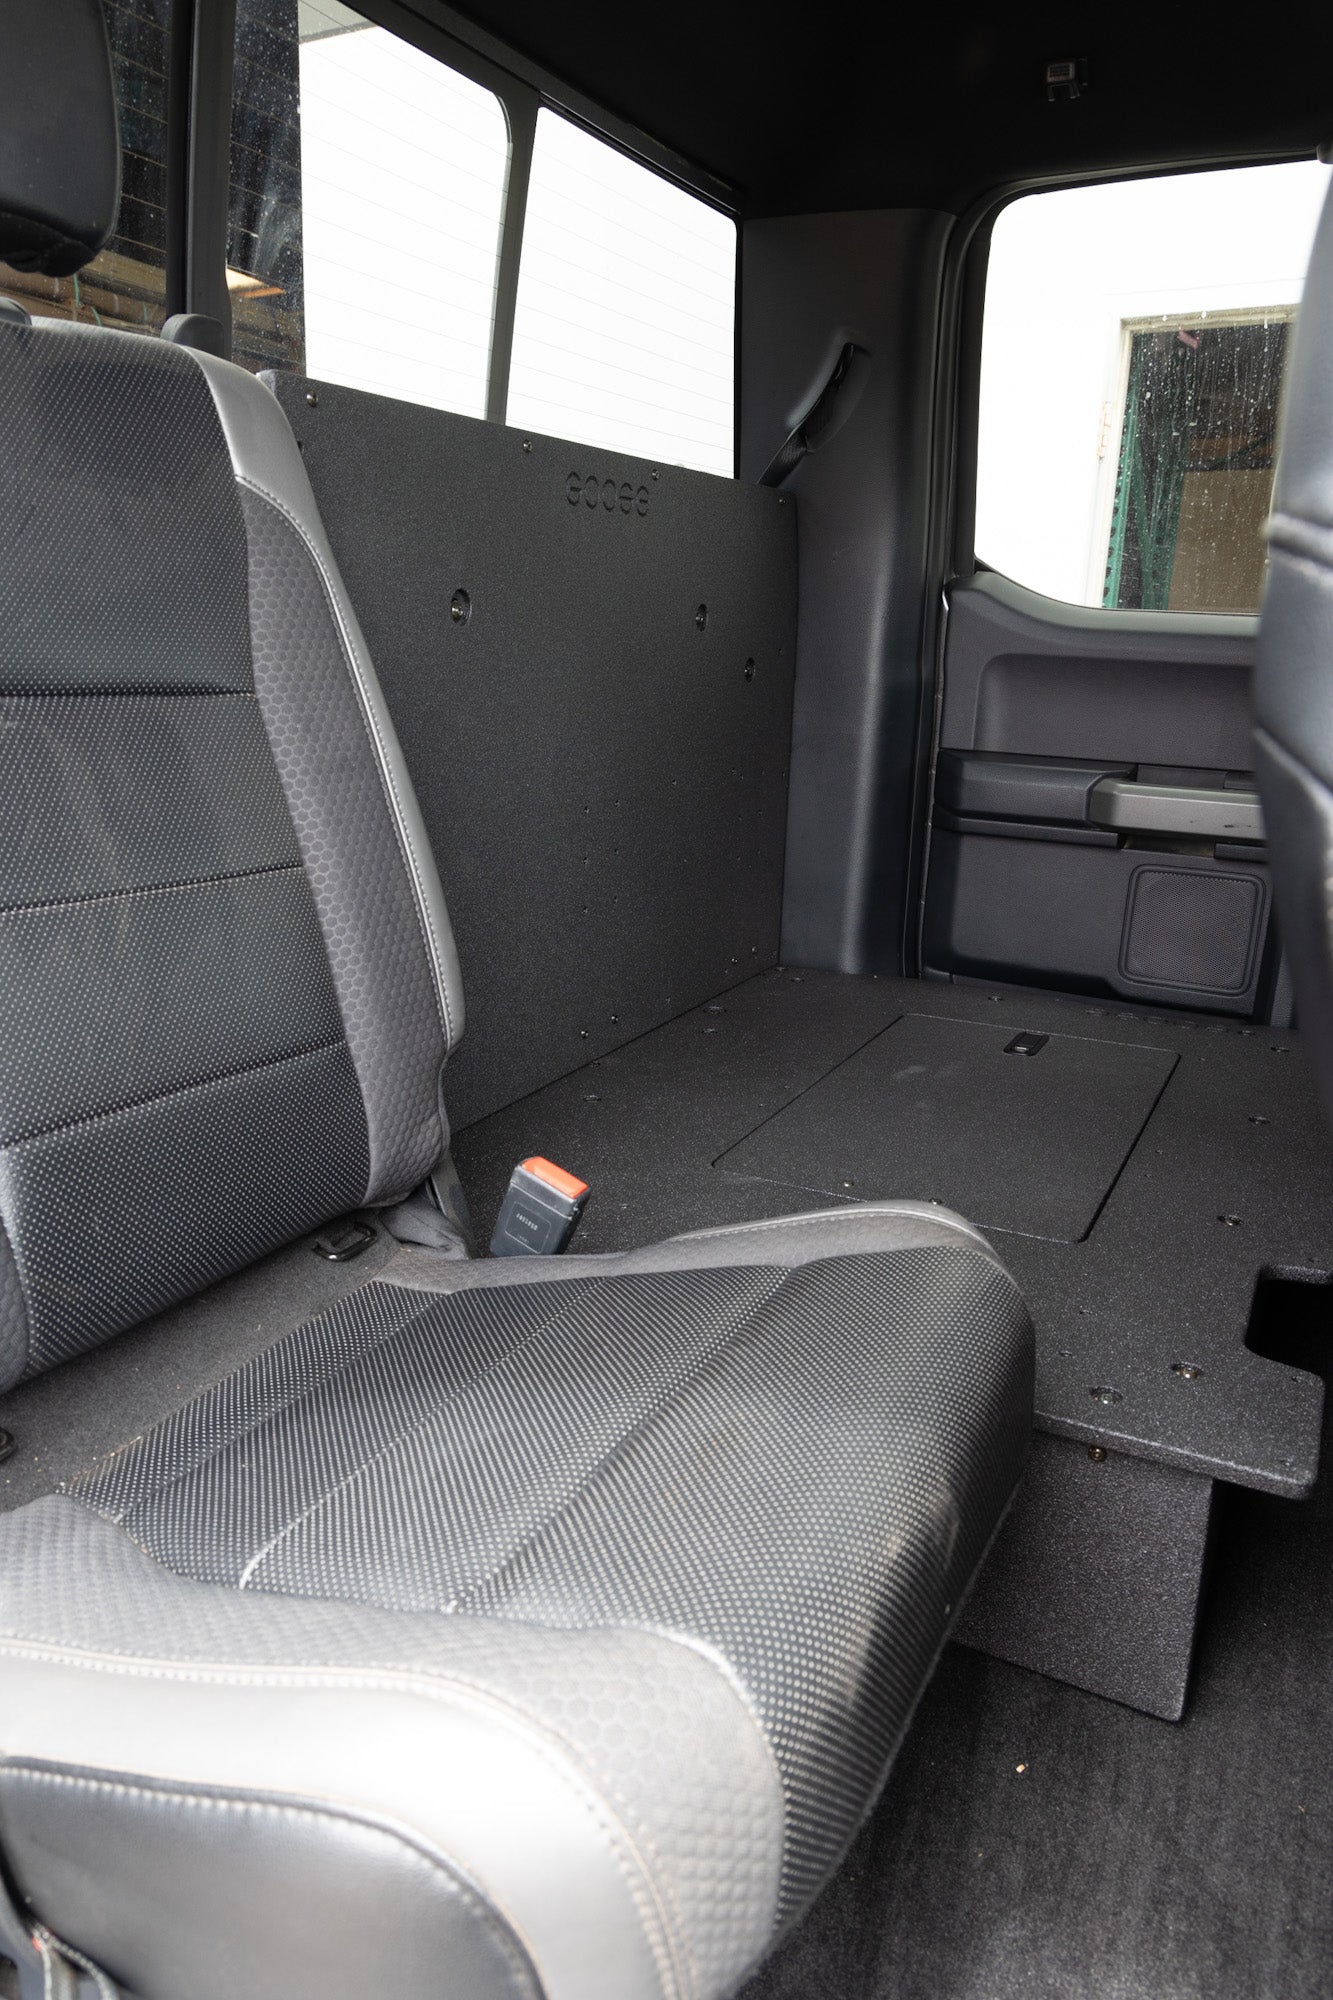 Goose Gear Ford Super Duty F250-F550 2017-Present 4th Gen. Super Cab - Second Row Seat Delete Plate System